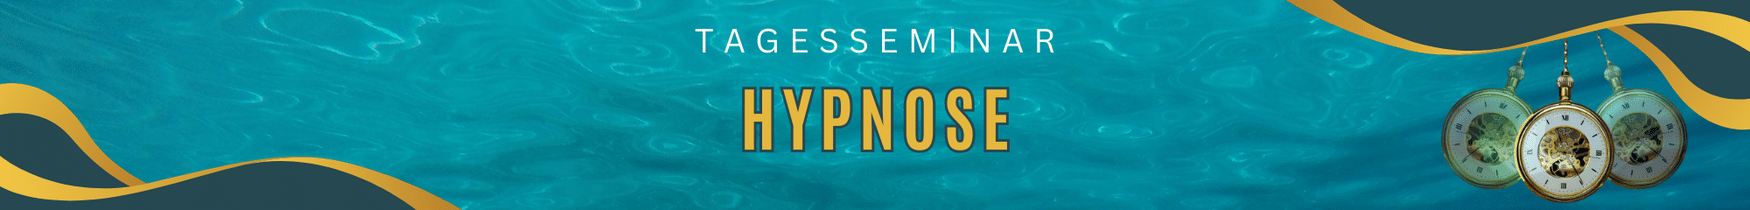 Hypnose-Banner